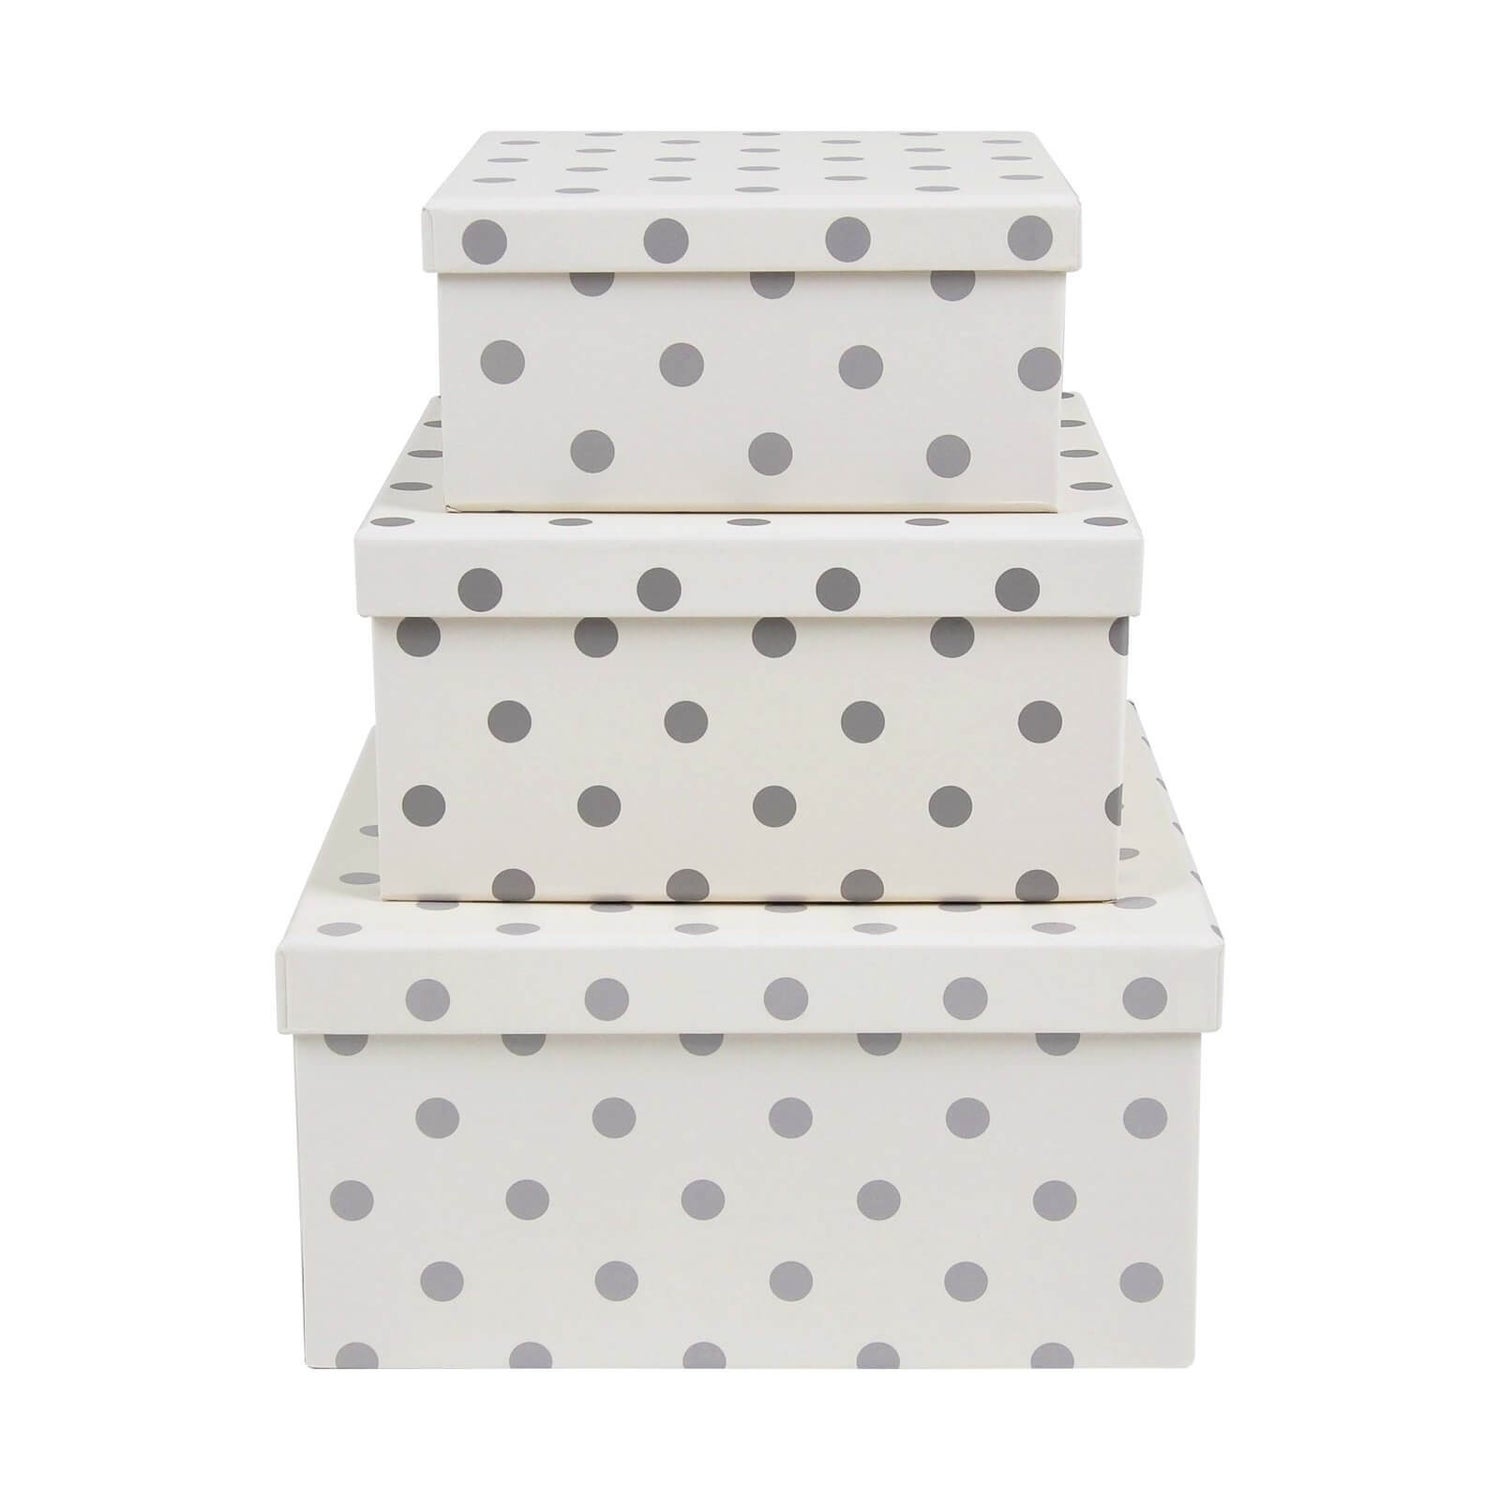 Spot Cardboard Storage Boxes Set Of 3, Large Decorative Cardboard Storage Boxes With Lids Uk